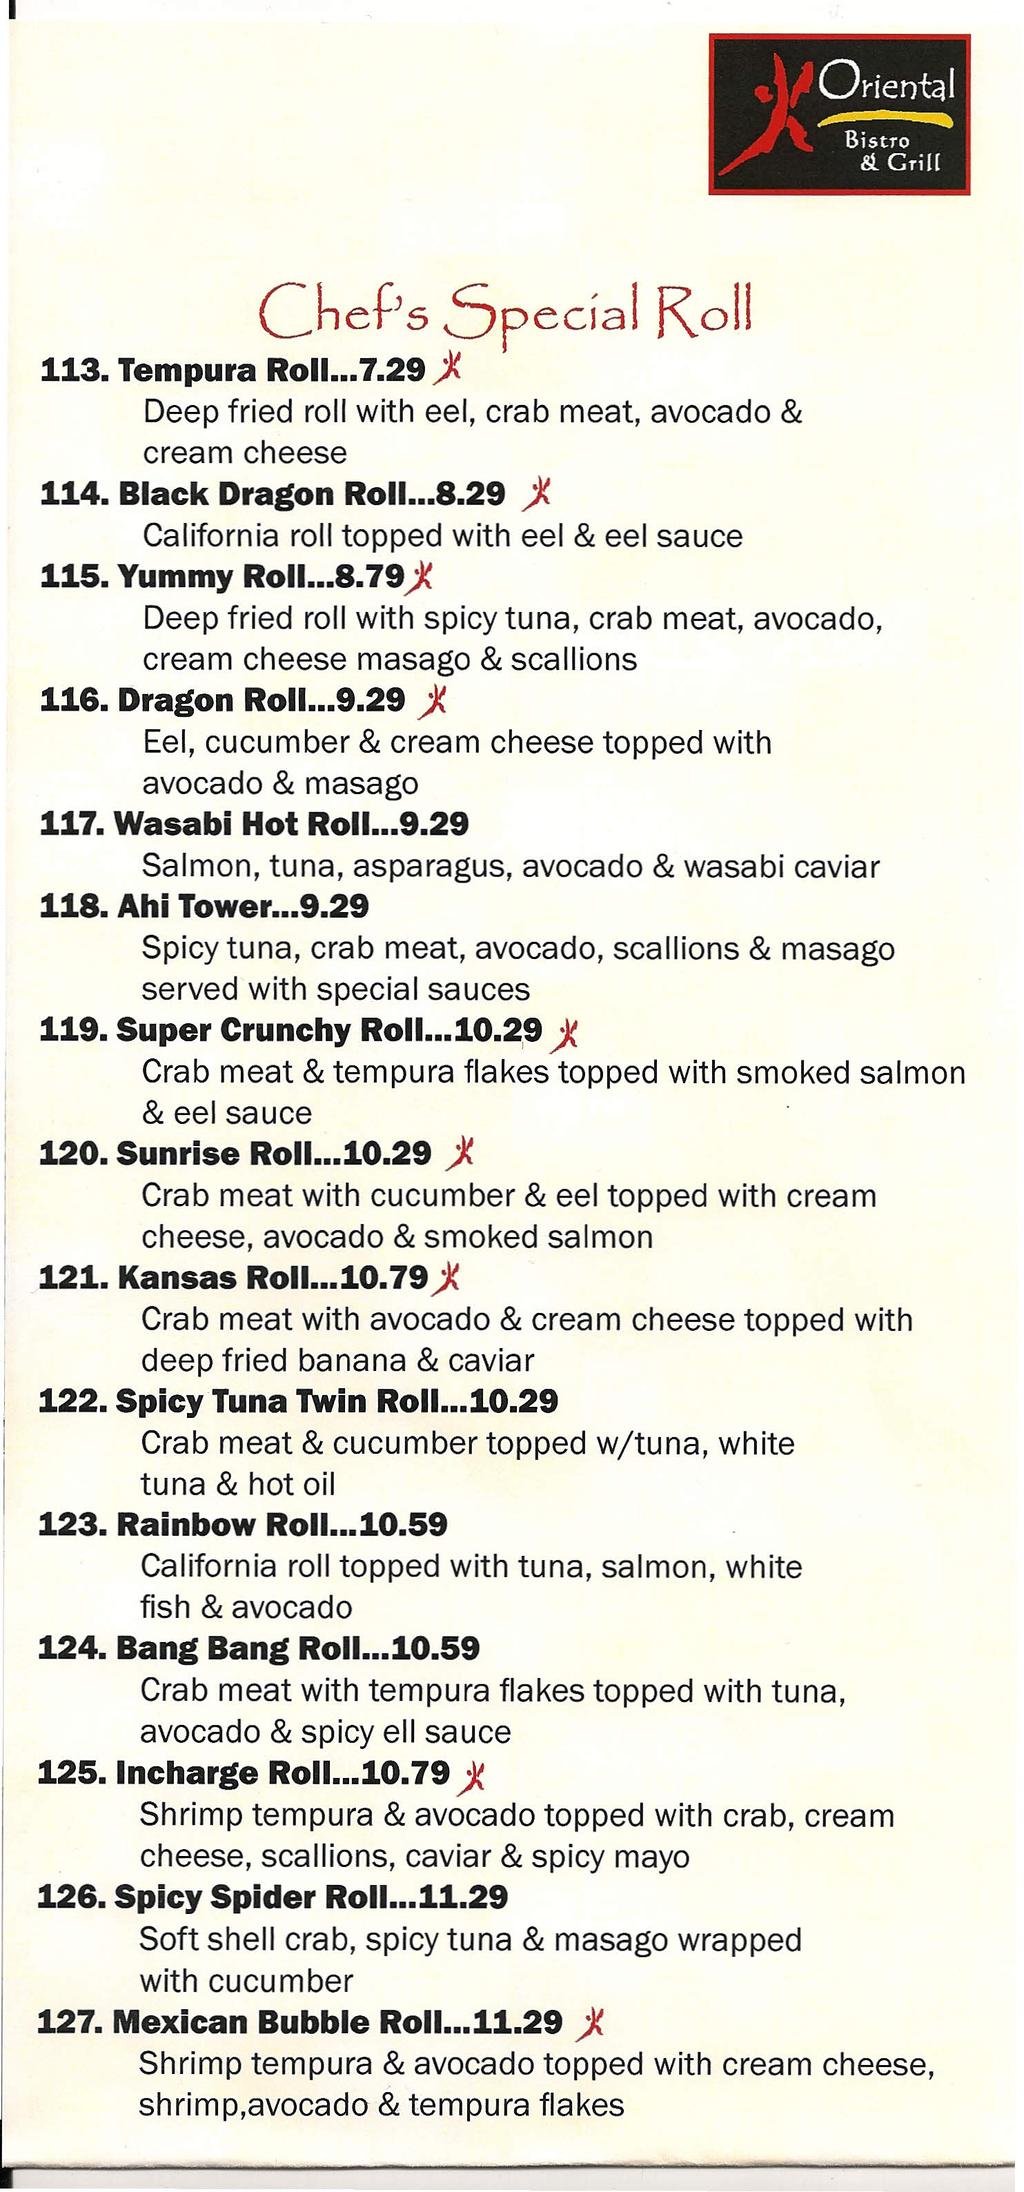 Ol"ient~1 ~ Bistro & c-ur Chet)s Special Roll 113. Tempura RolI...7.29 )( Deep fried roll with eel, crab meat, avocado cream cheese 114. Black Dragon RolI...8.